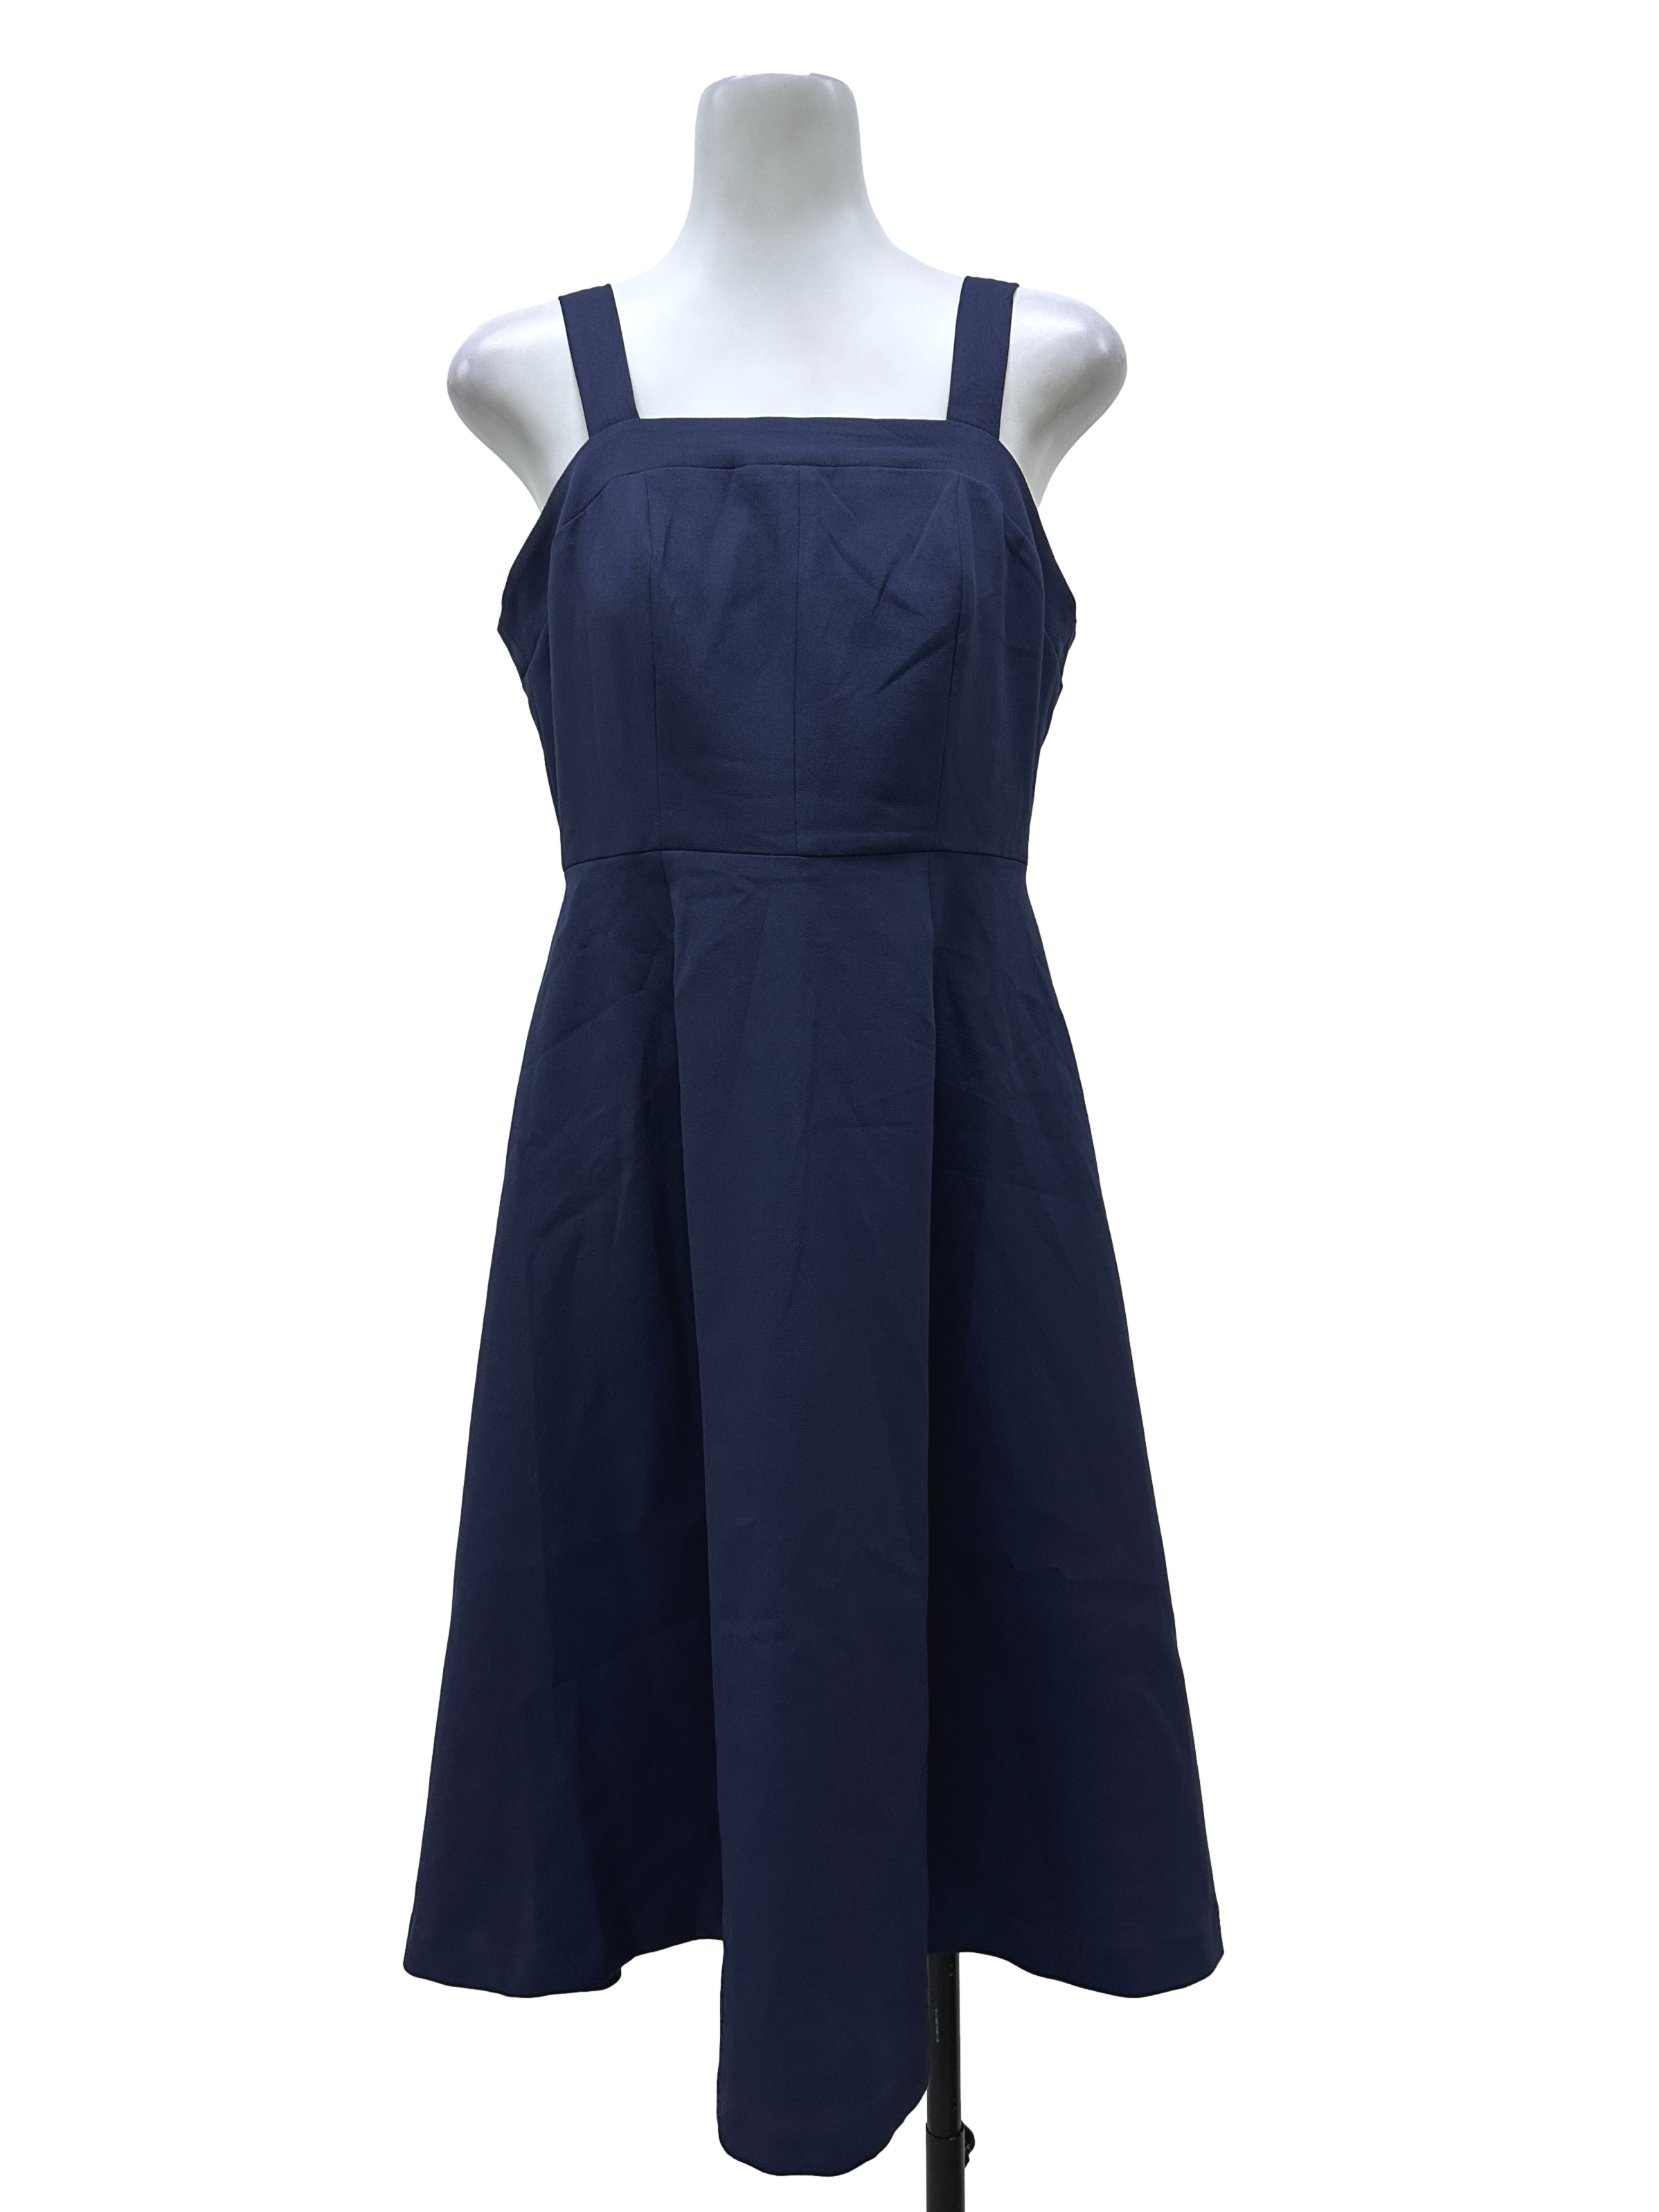 Navy Blue Apron Dress